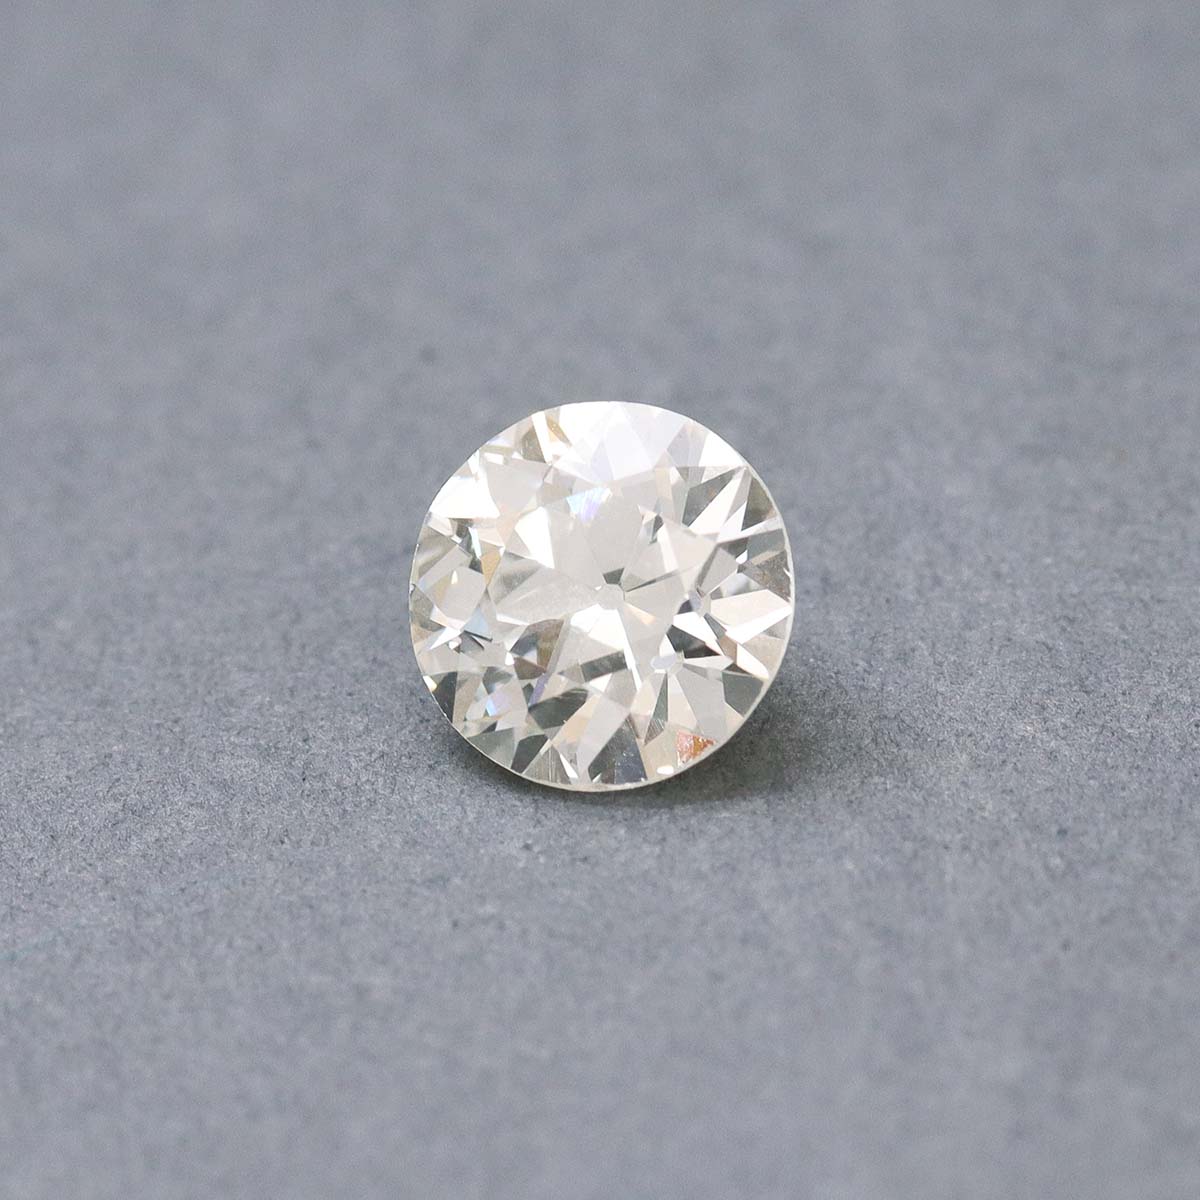 Old European Cut Diamond 3.58 carats N VS1 GIA #D230602-5